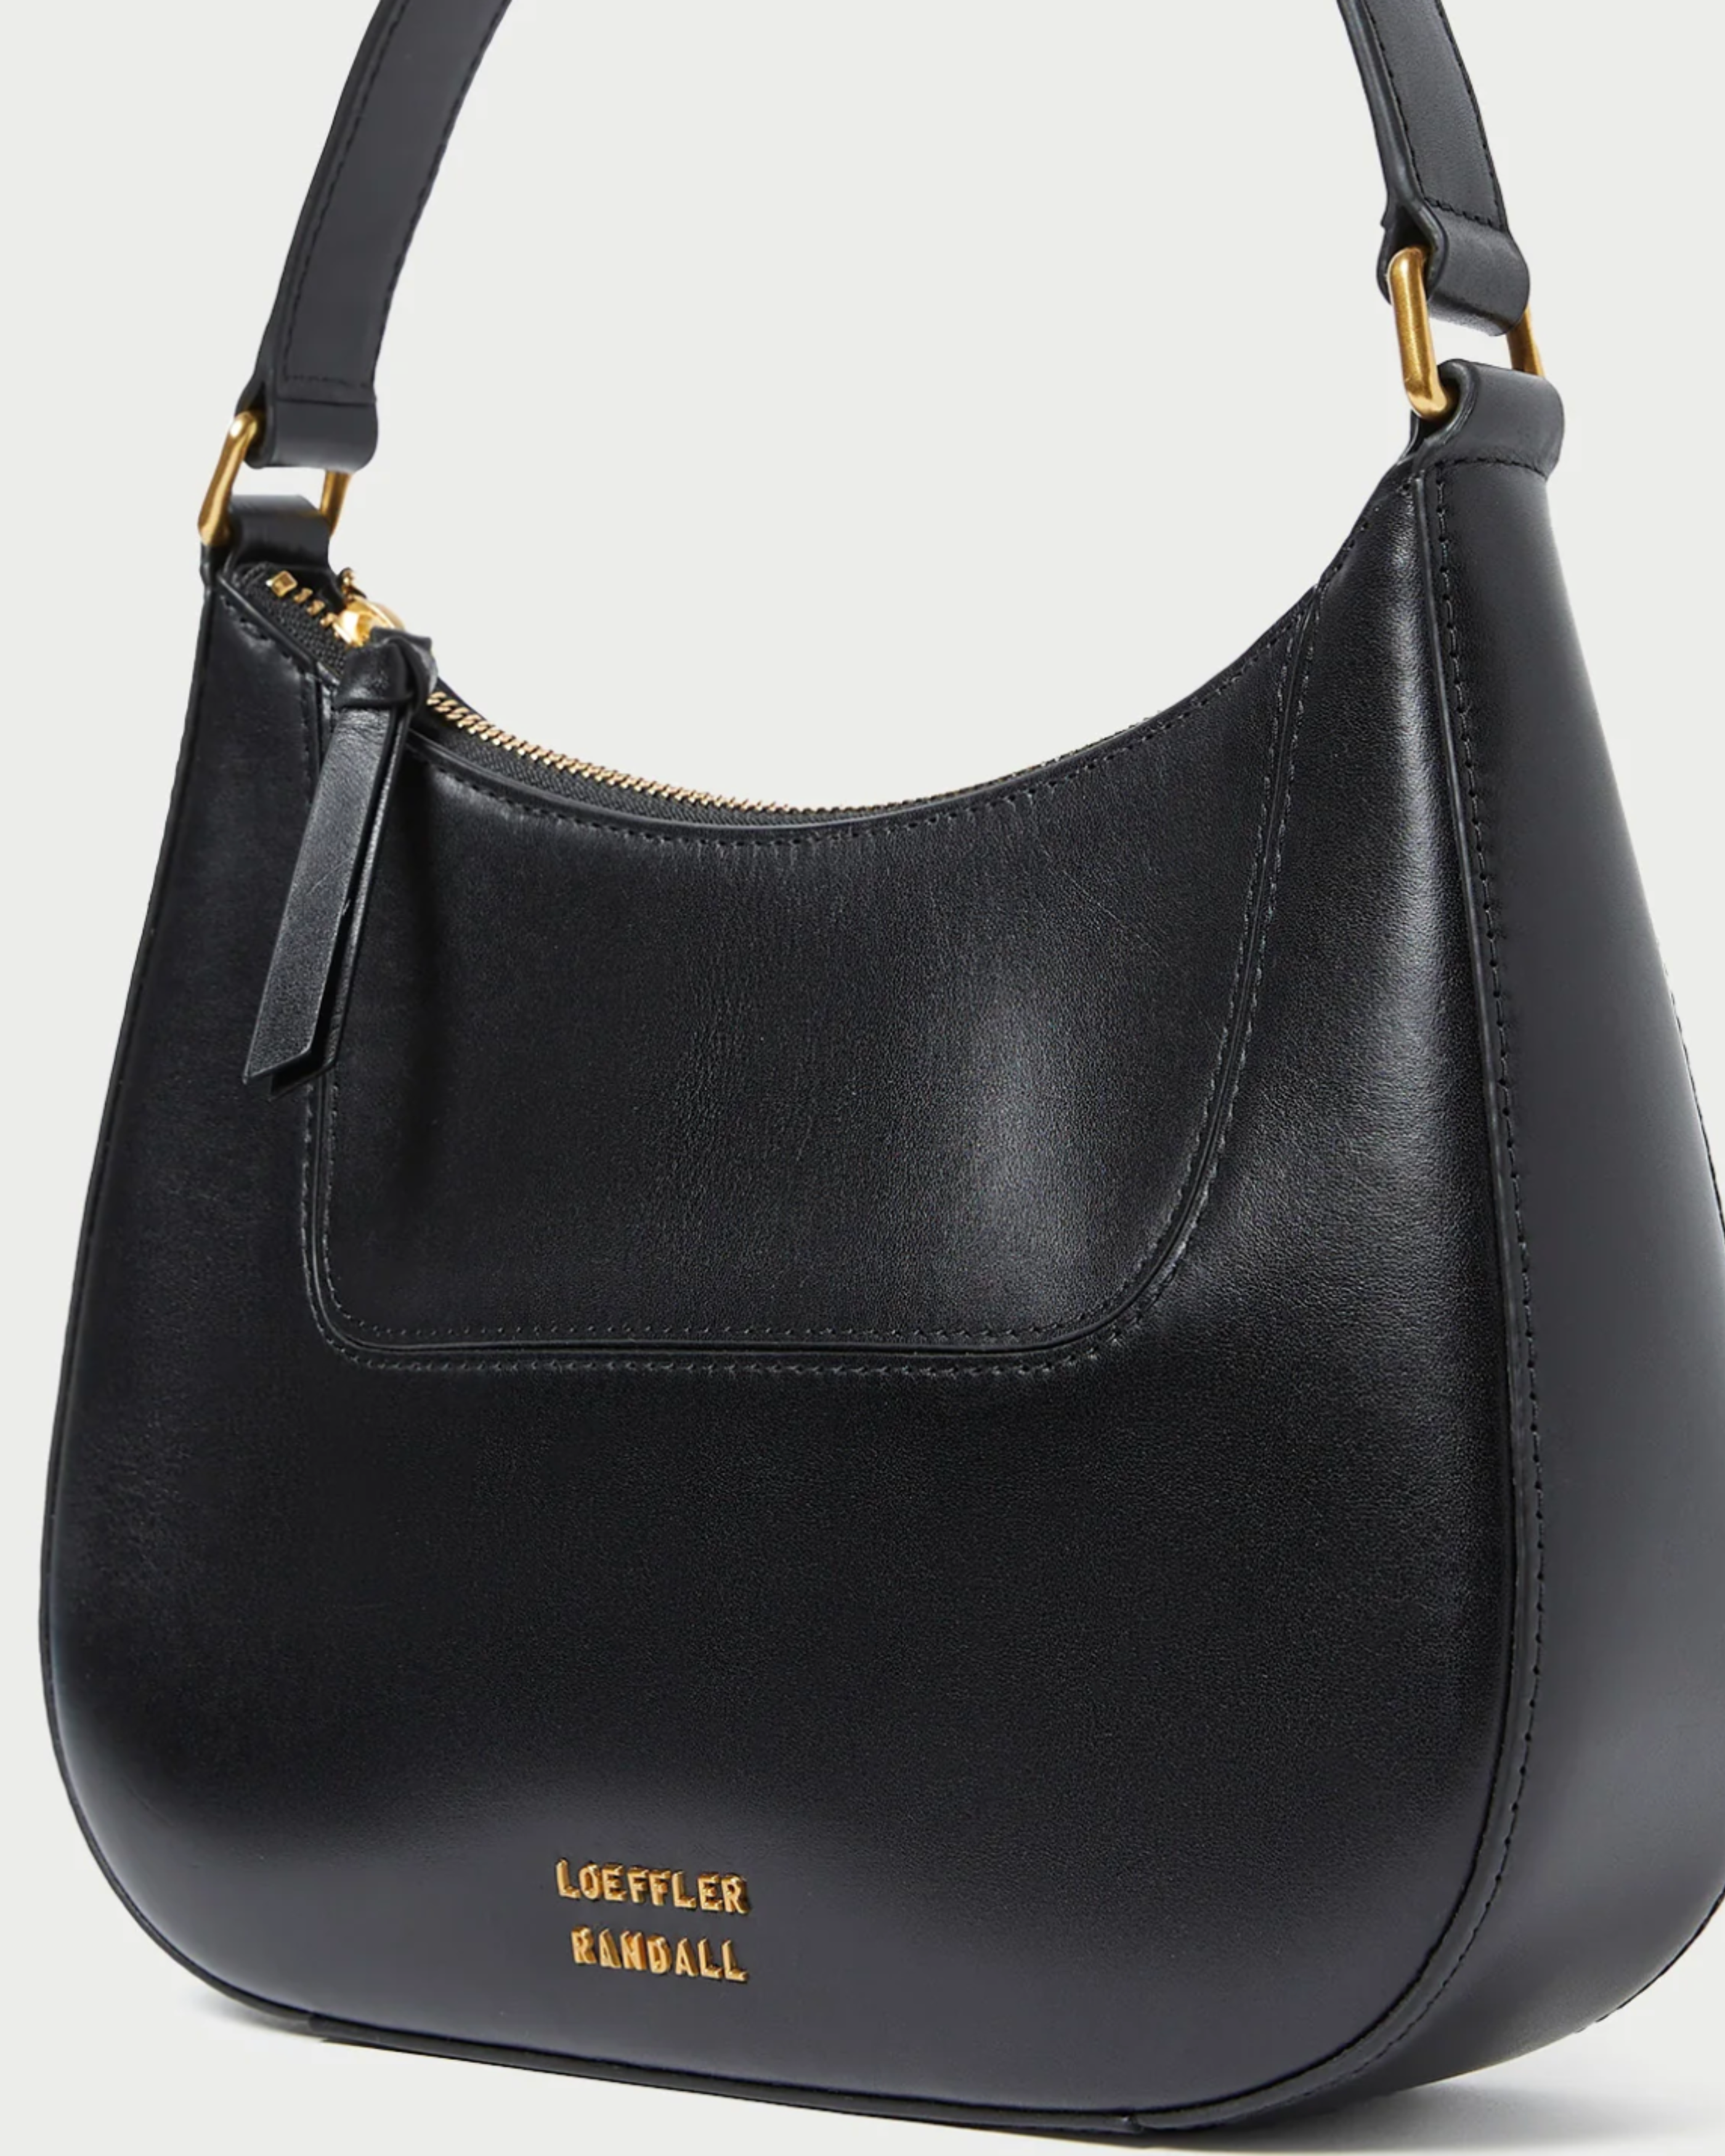 Loeffler Randall Greta Leather Shoulder Bag in Black